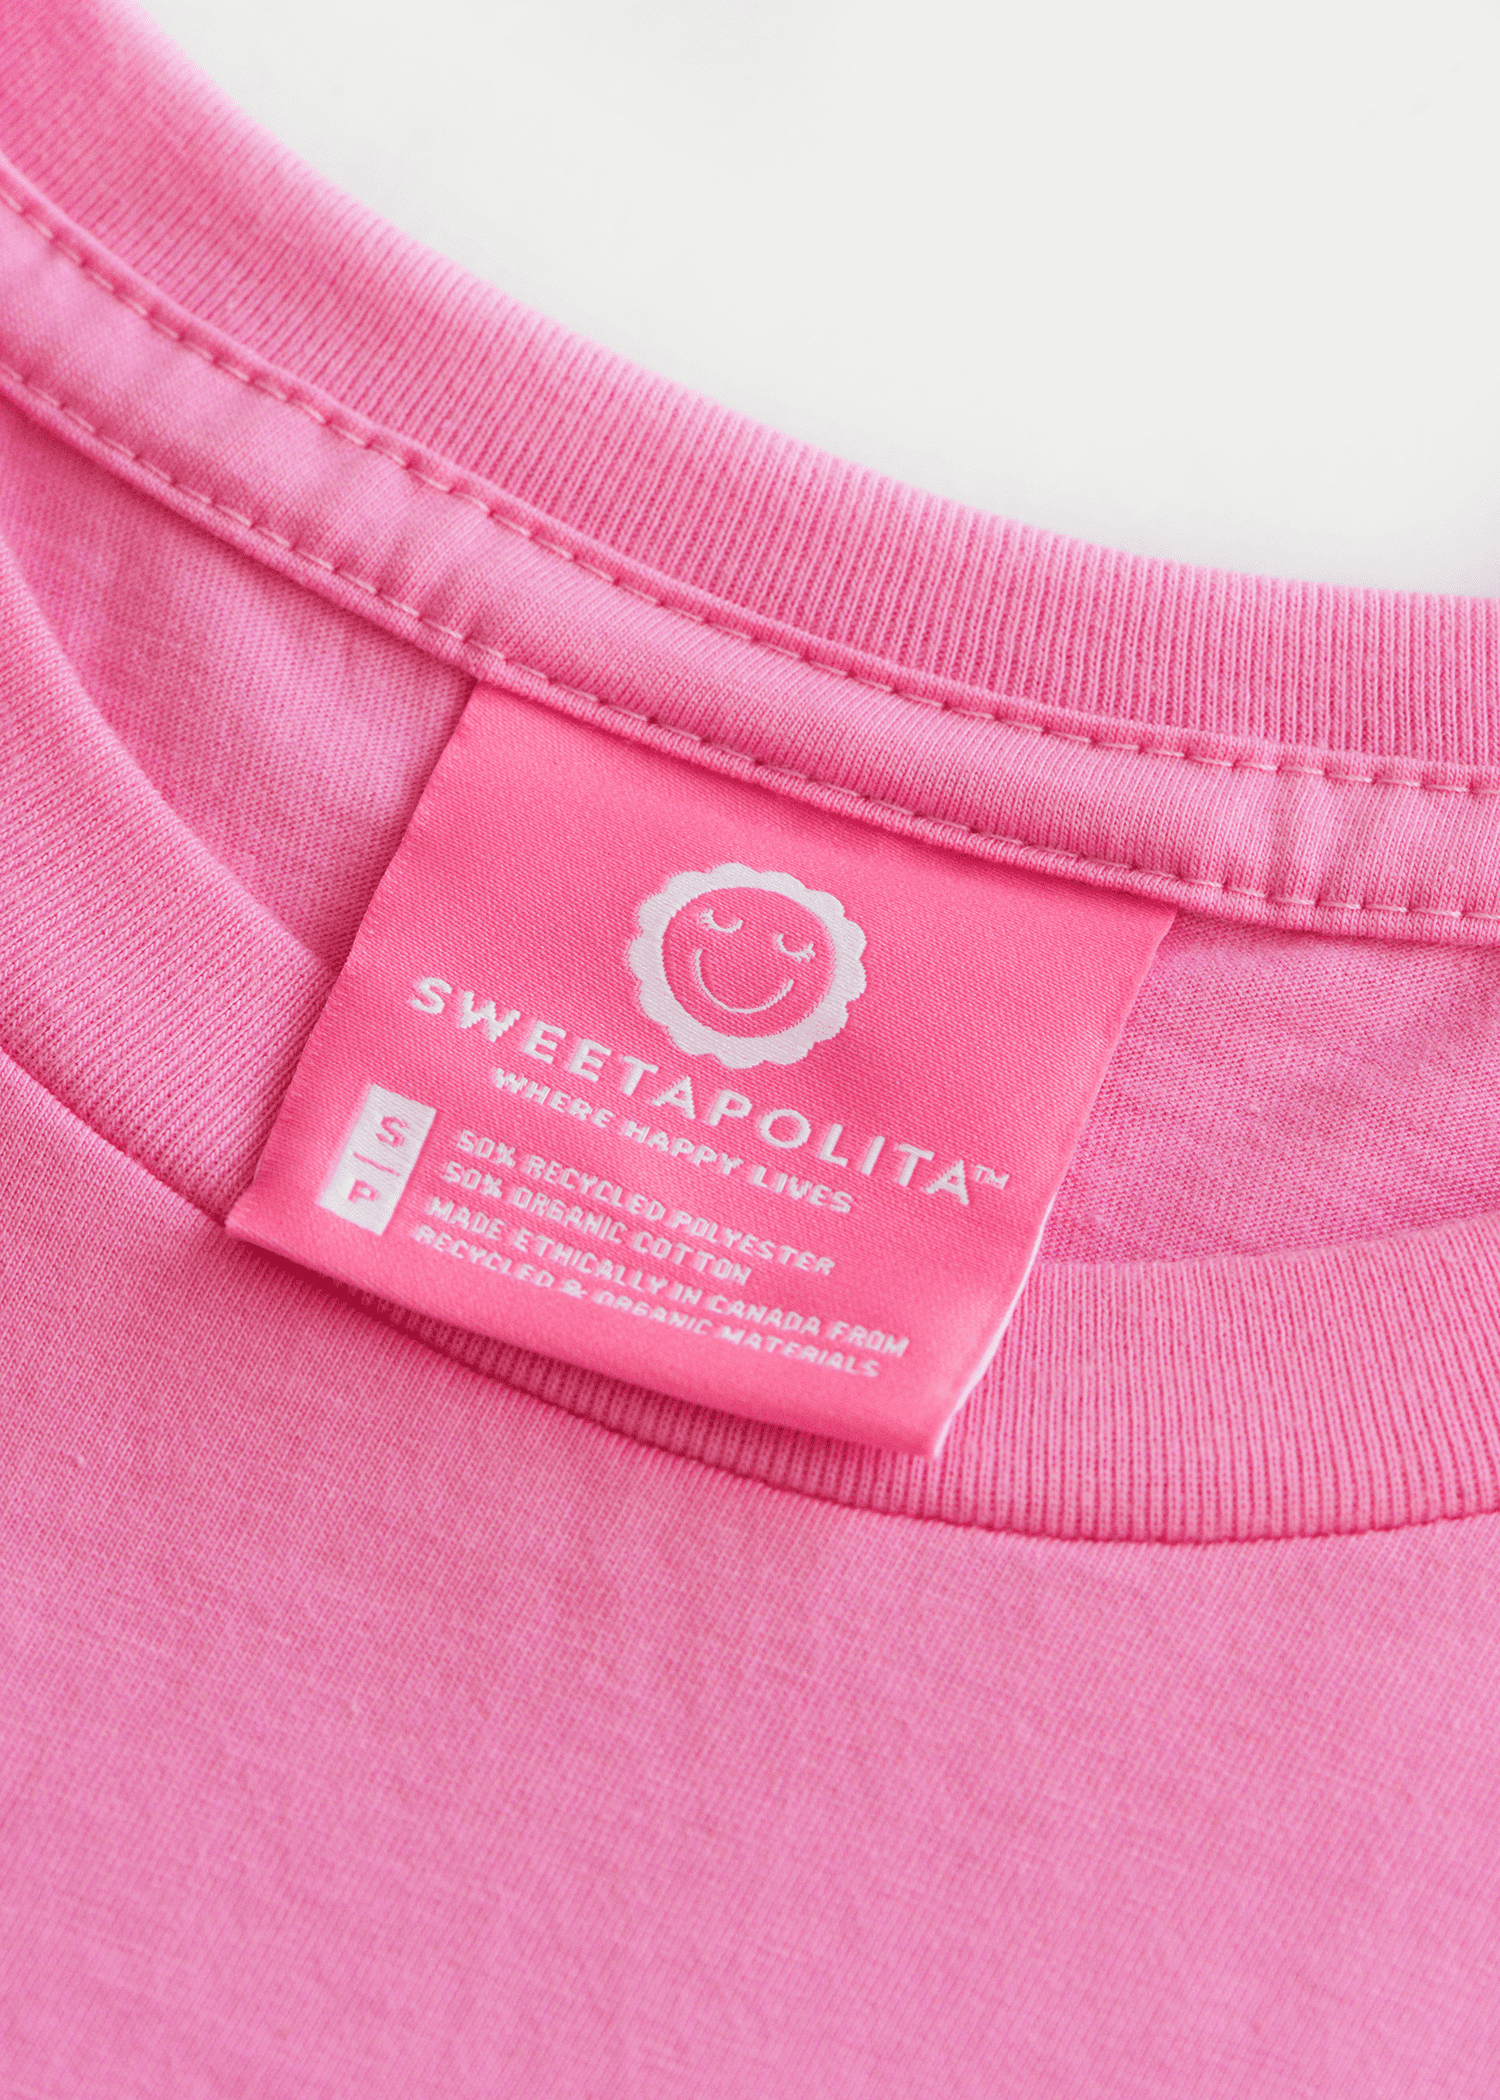 Sprinkle Squad Bubblegum Pink T-Shirt | Unisex - US